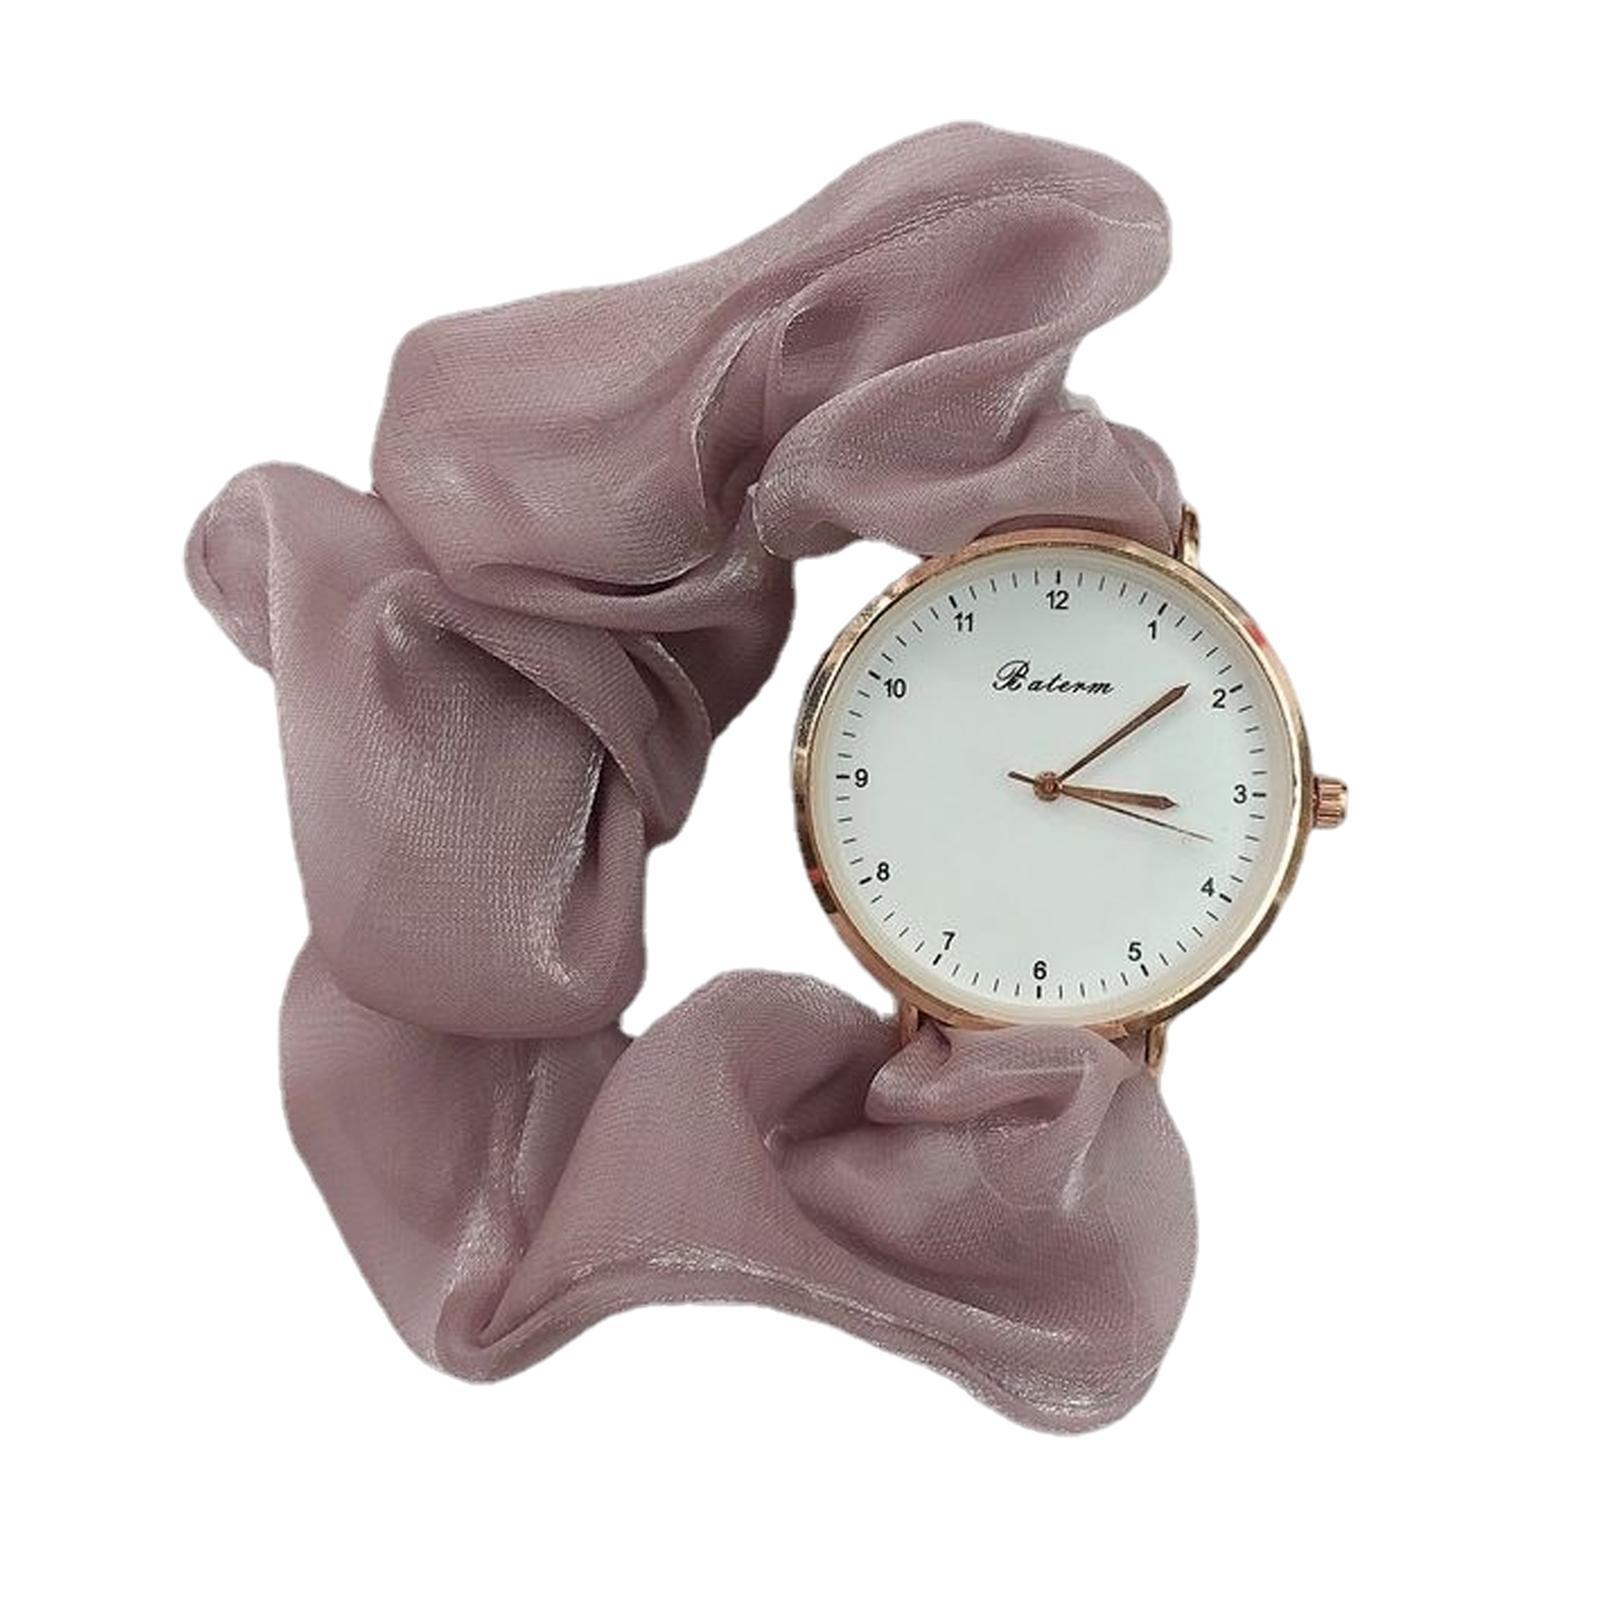 Wrist Watch Ribbon Elegant Digital Watches Casual Women Bracelets Leisure Gift